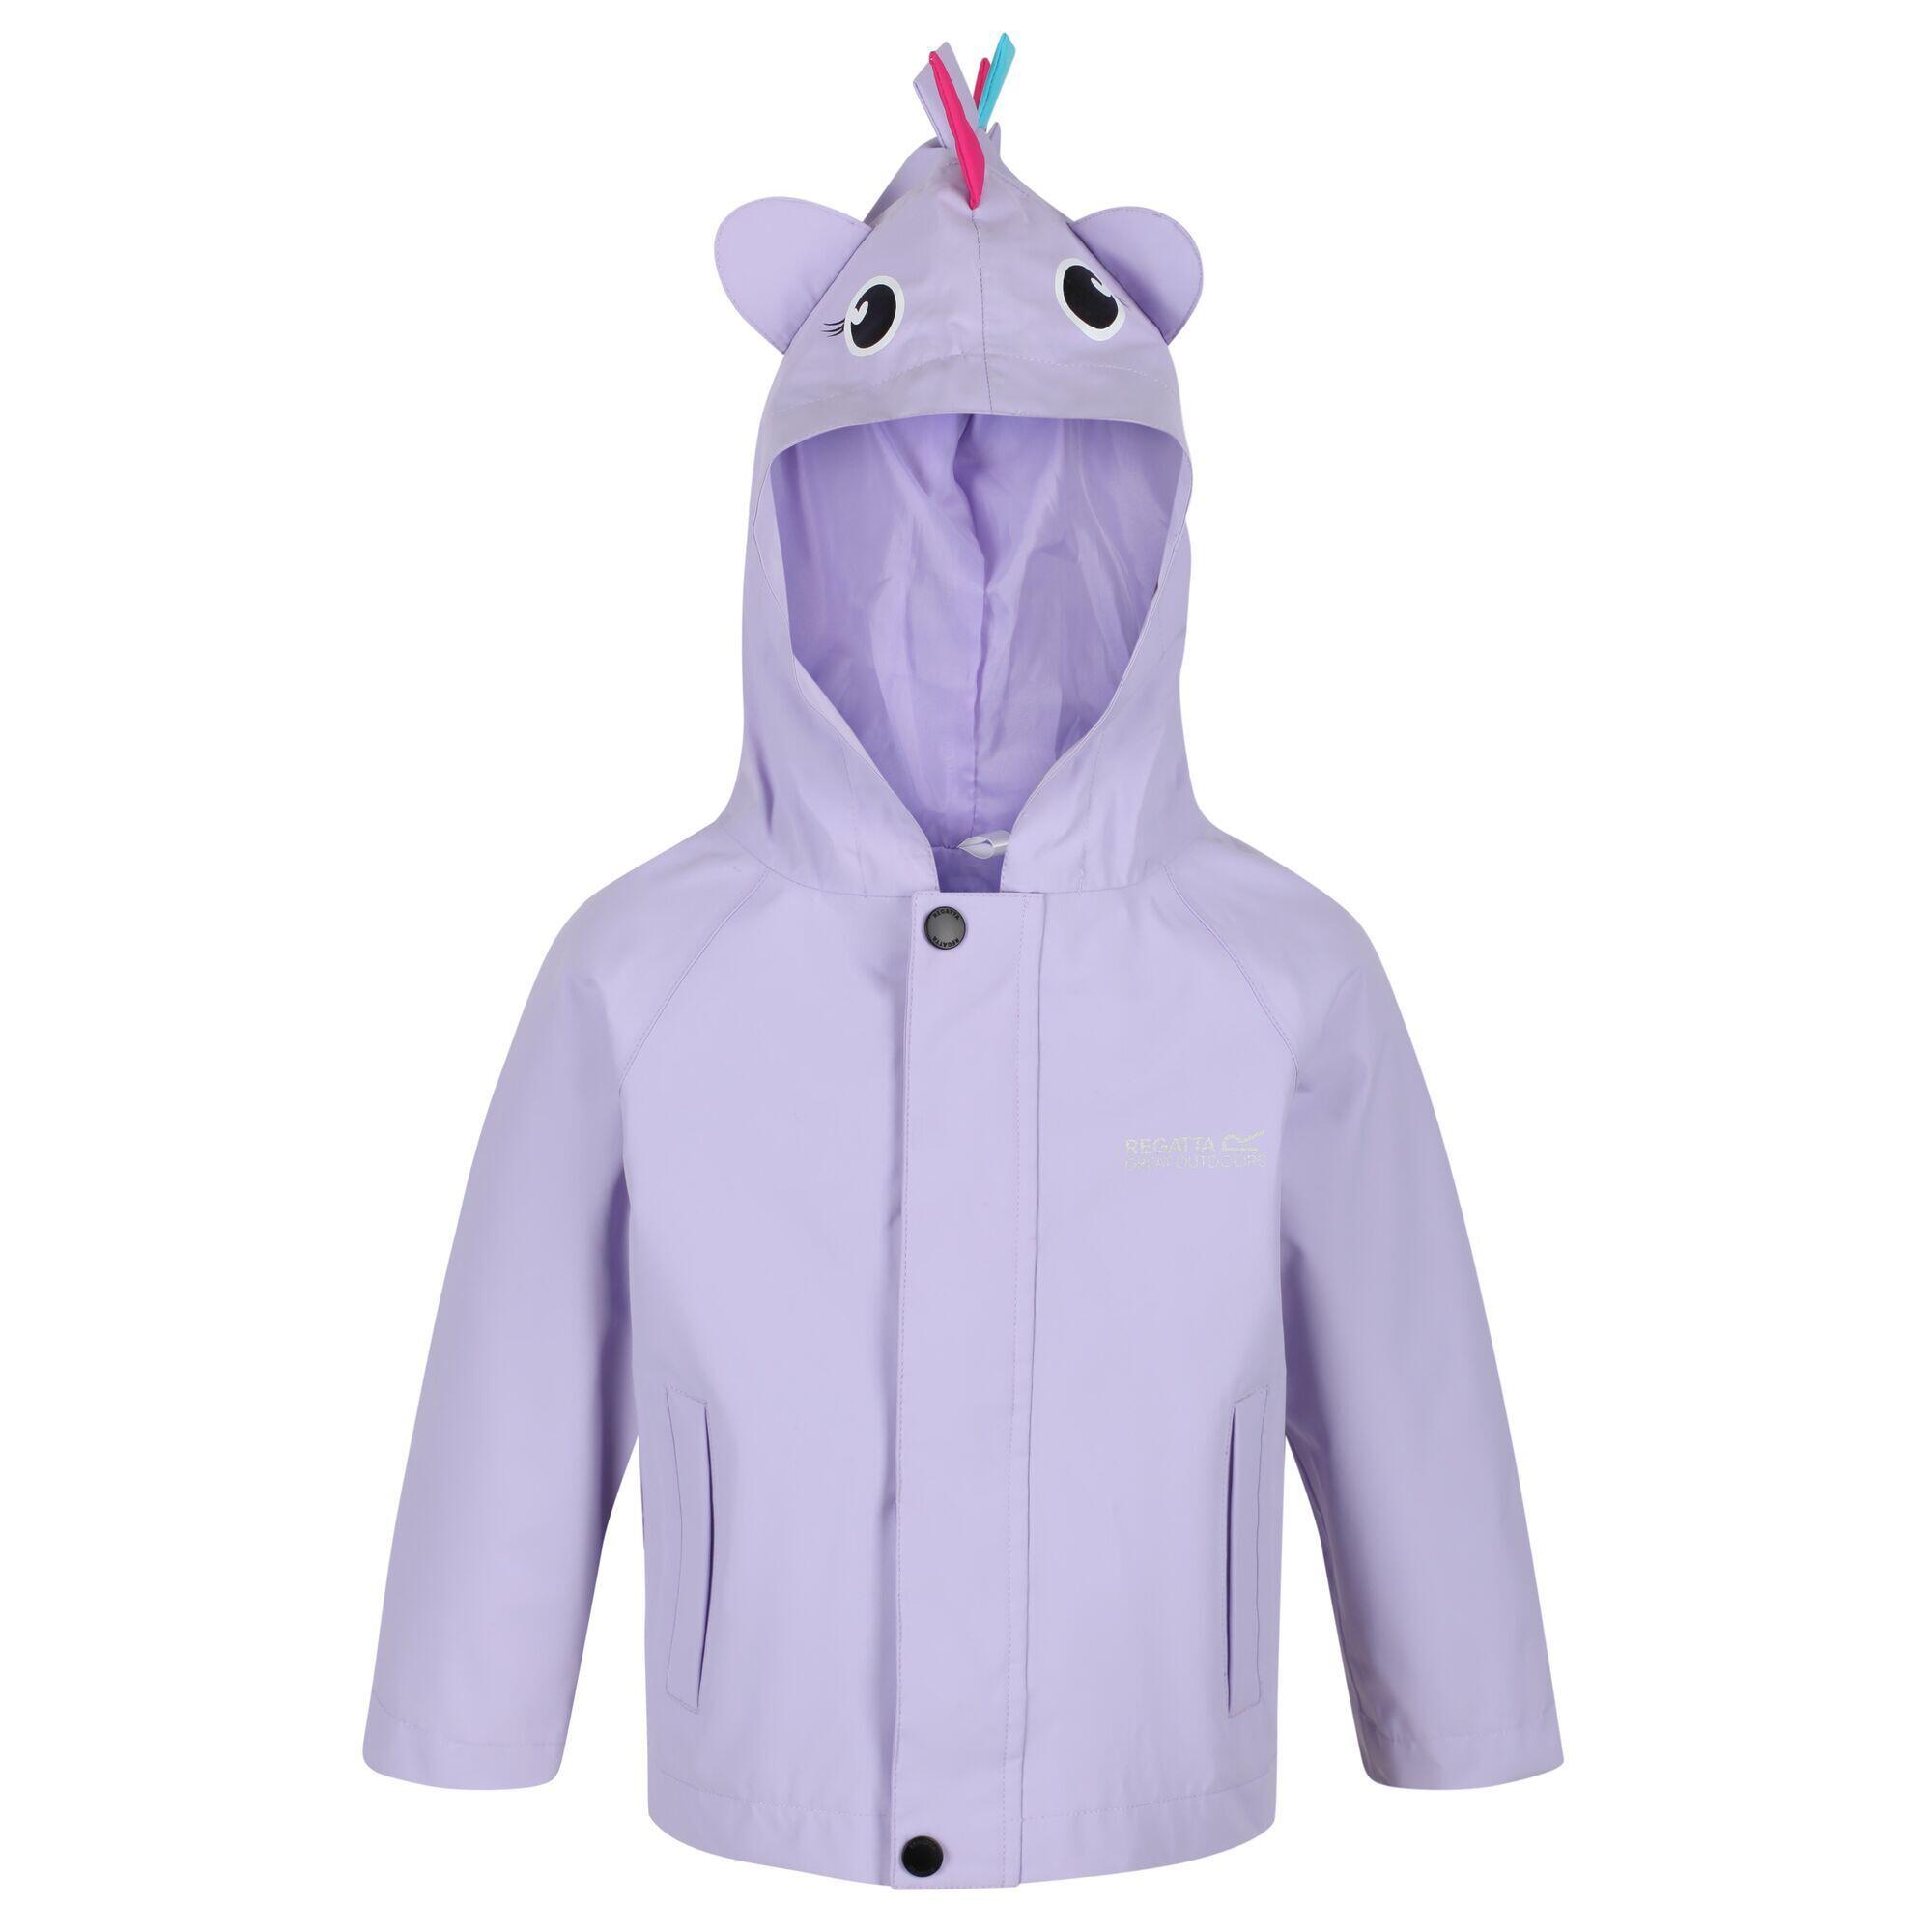 REGATTA Childrens/Kids Unicorn Waterproof Jacket (Lilac)